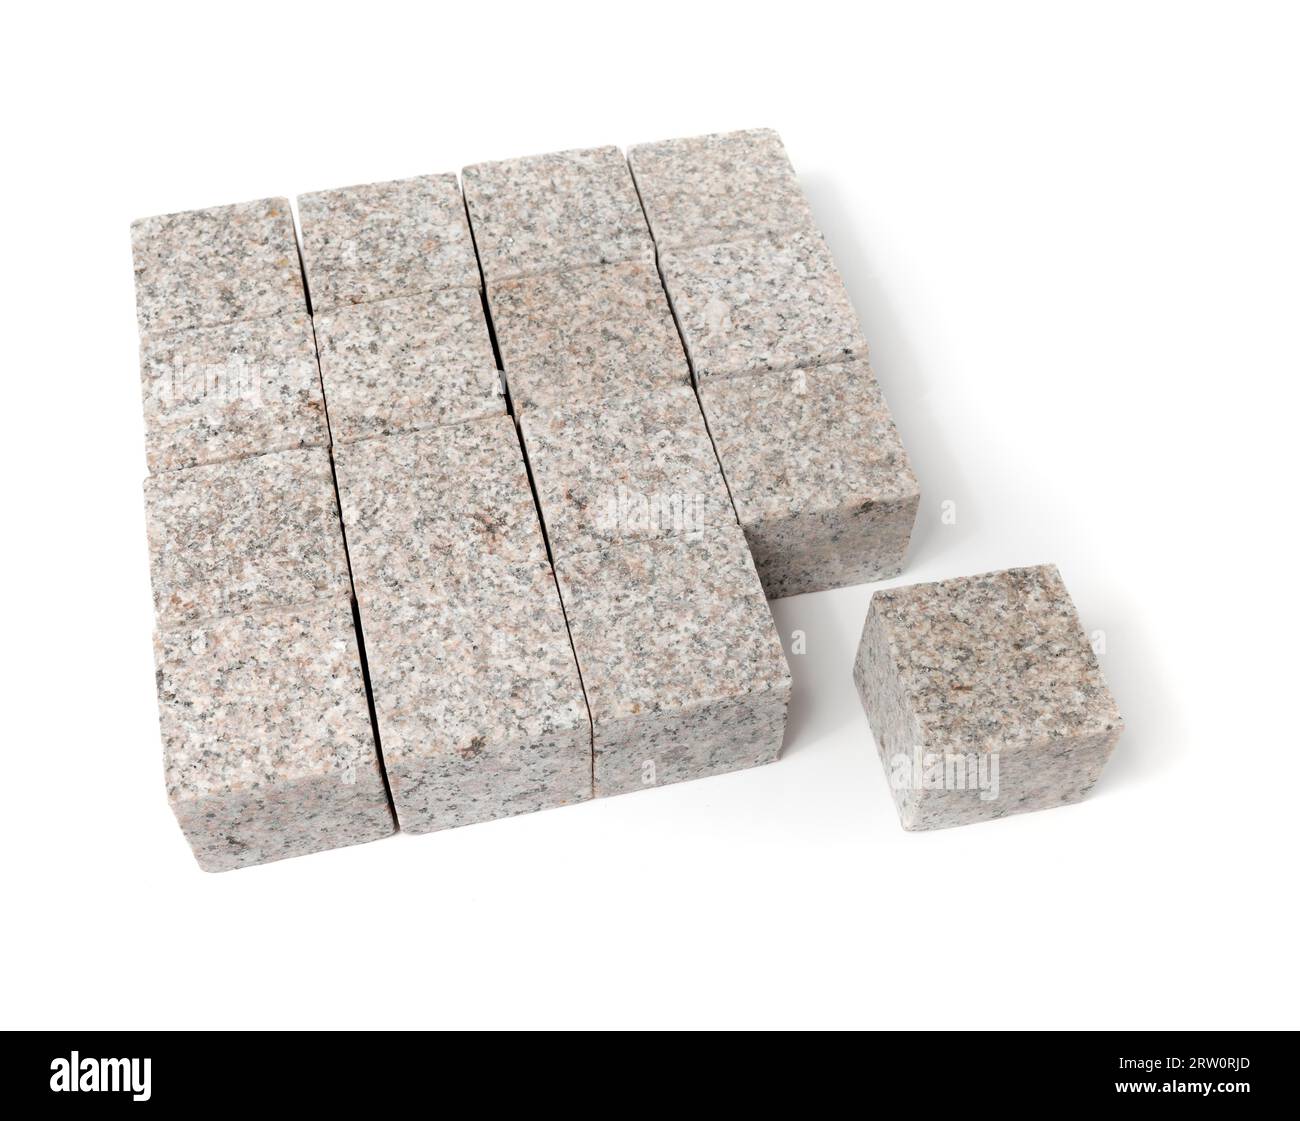 Square shape of blocks made of granite rock Stock Photo